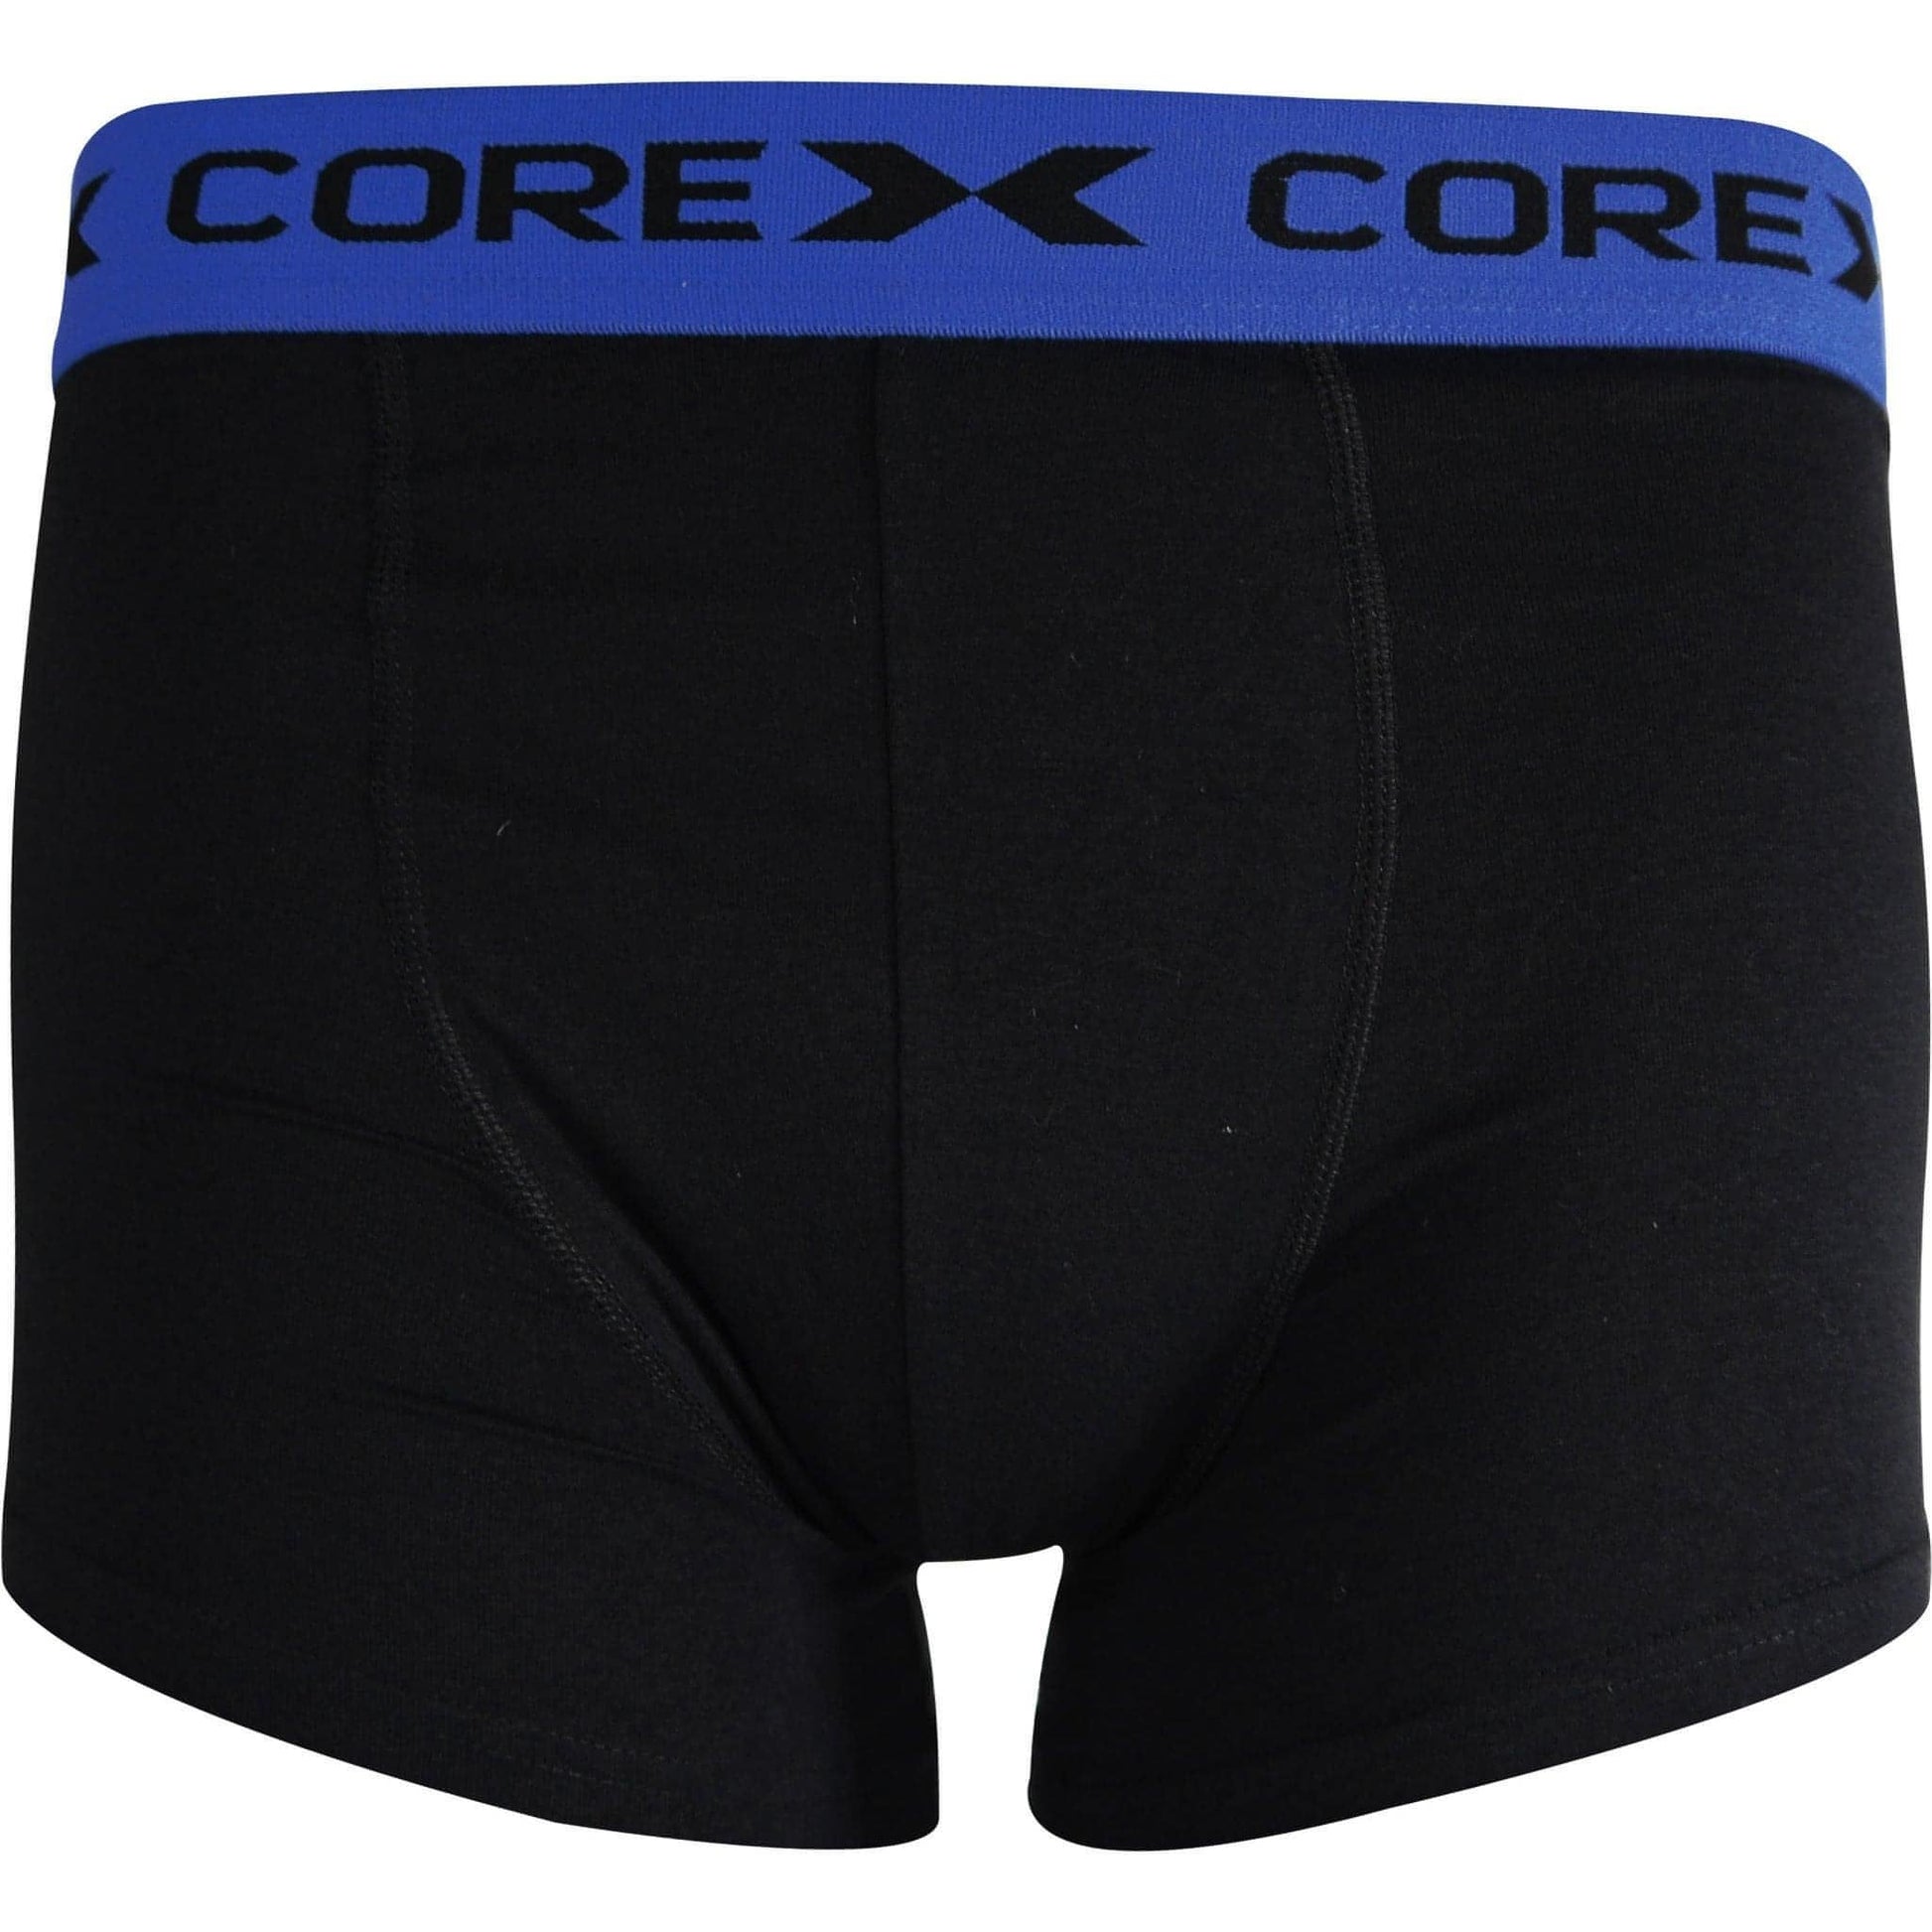 Corex Fitness Classic Pack Boxers 1P204921Wm Blueorange Blue Front - Front View